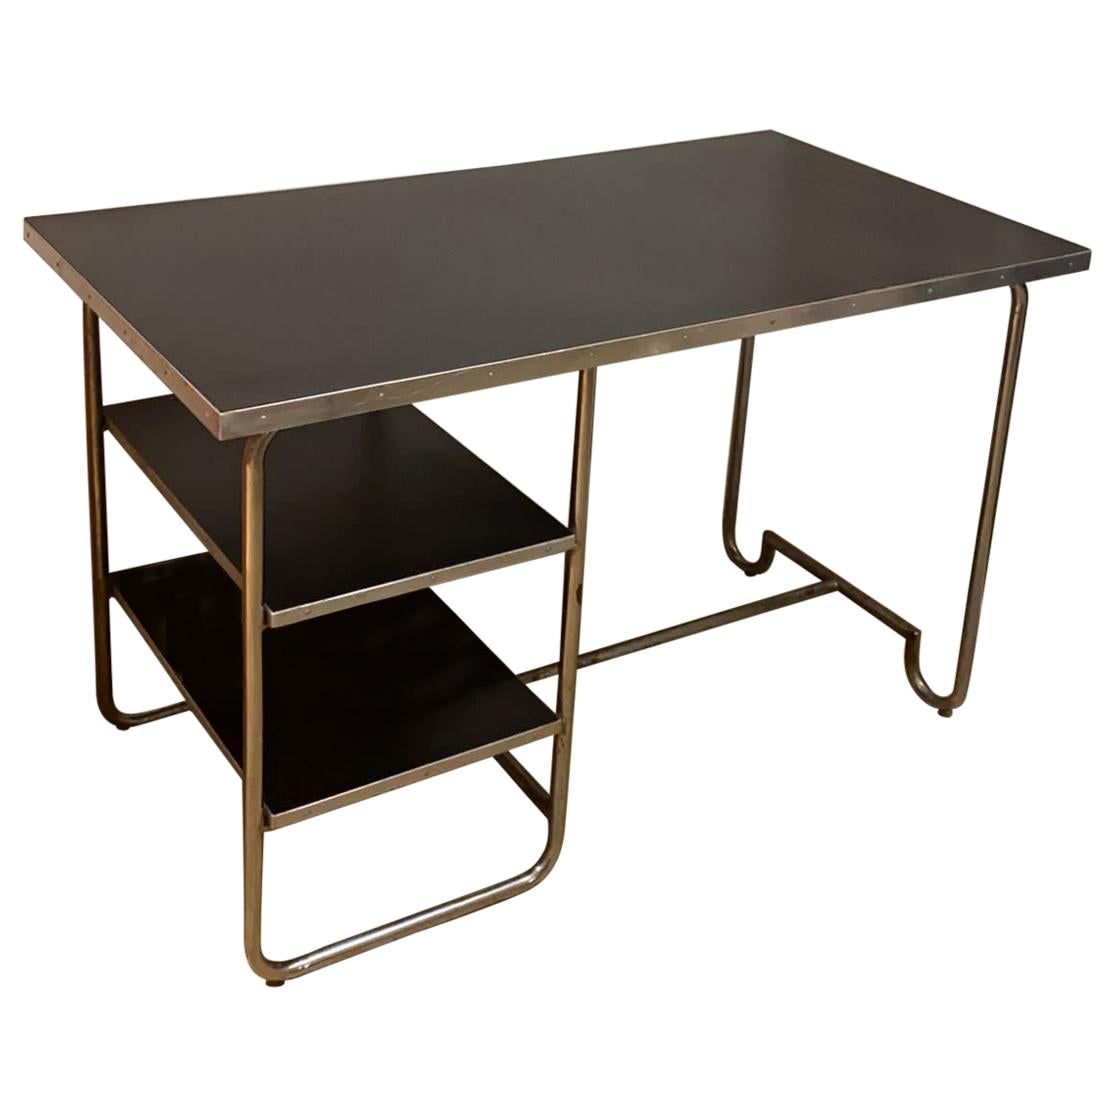 Marcel Breuer Style Desk 1950s Mid-Century Modern